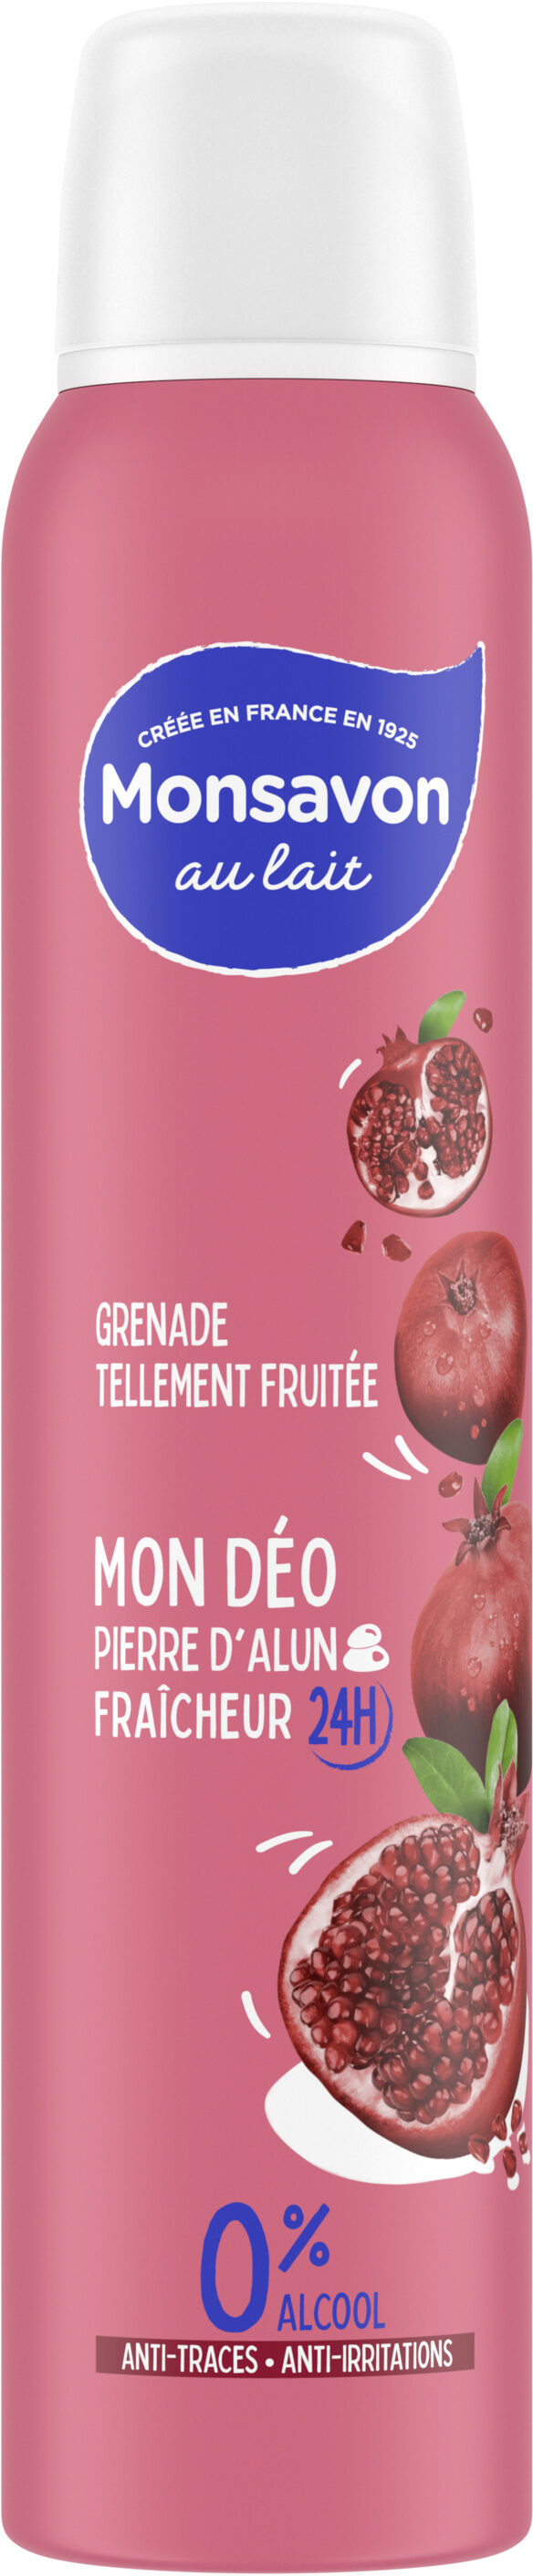 MONSAVON Déodorant Femme Spray Grenade Tellement Fraîche 200ml - Produit - fr